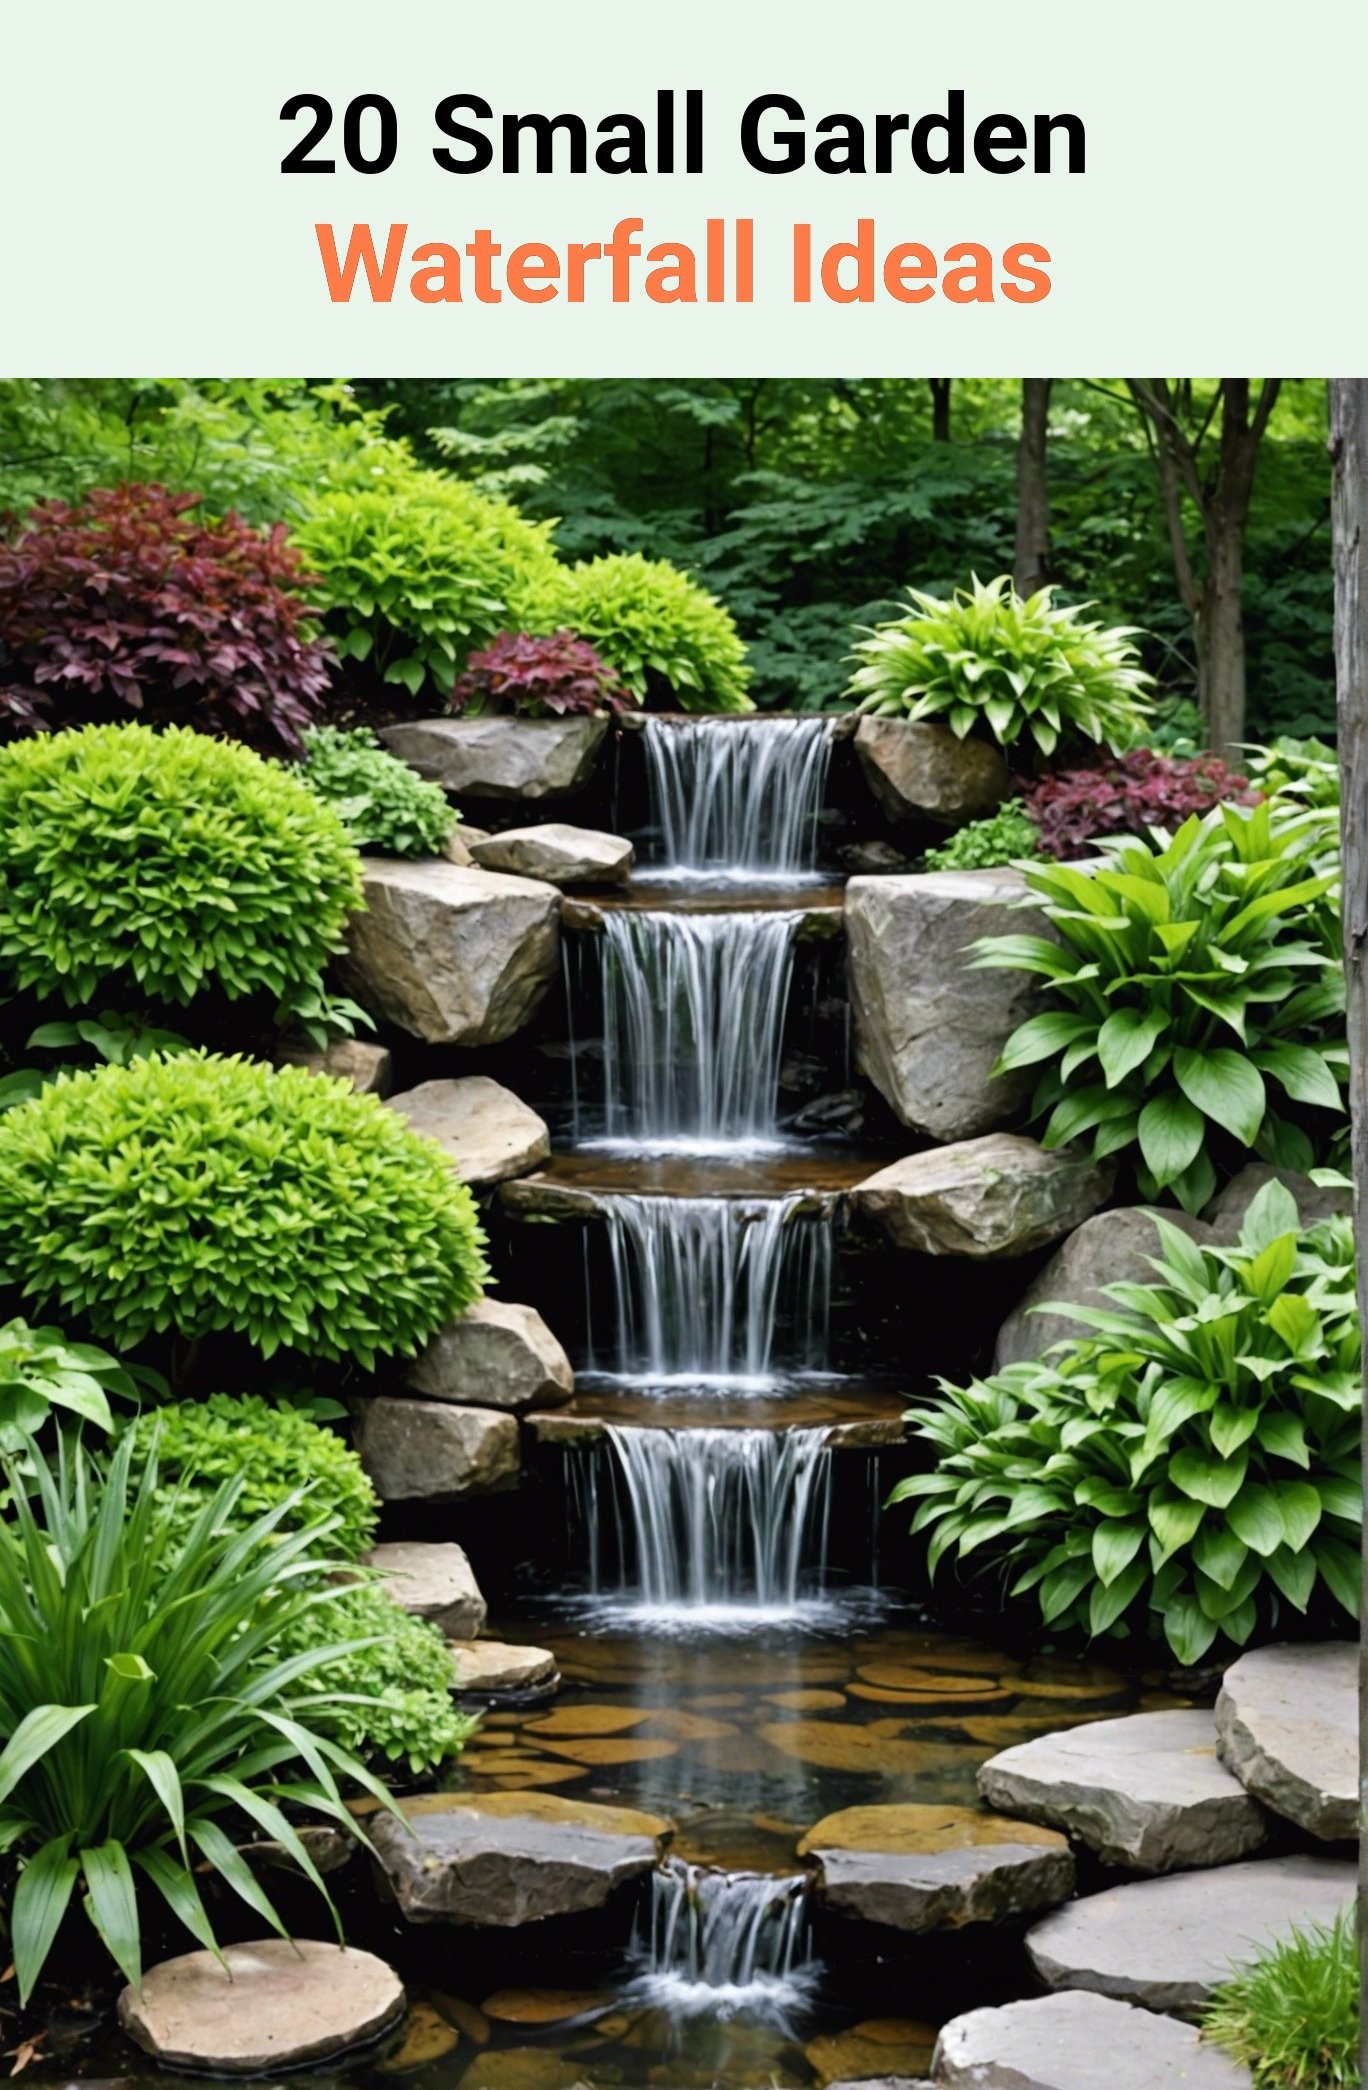 20 Small Garden Waterfall Ideas